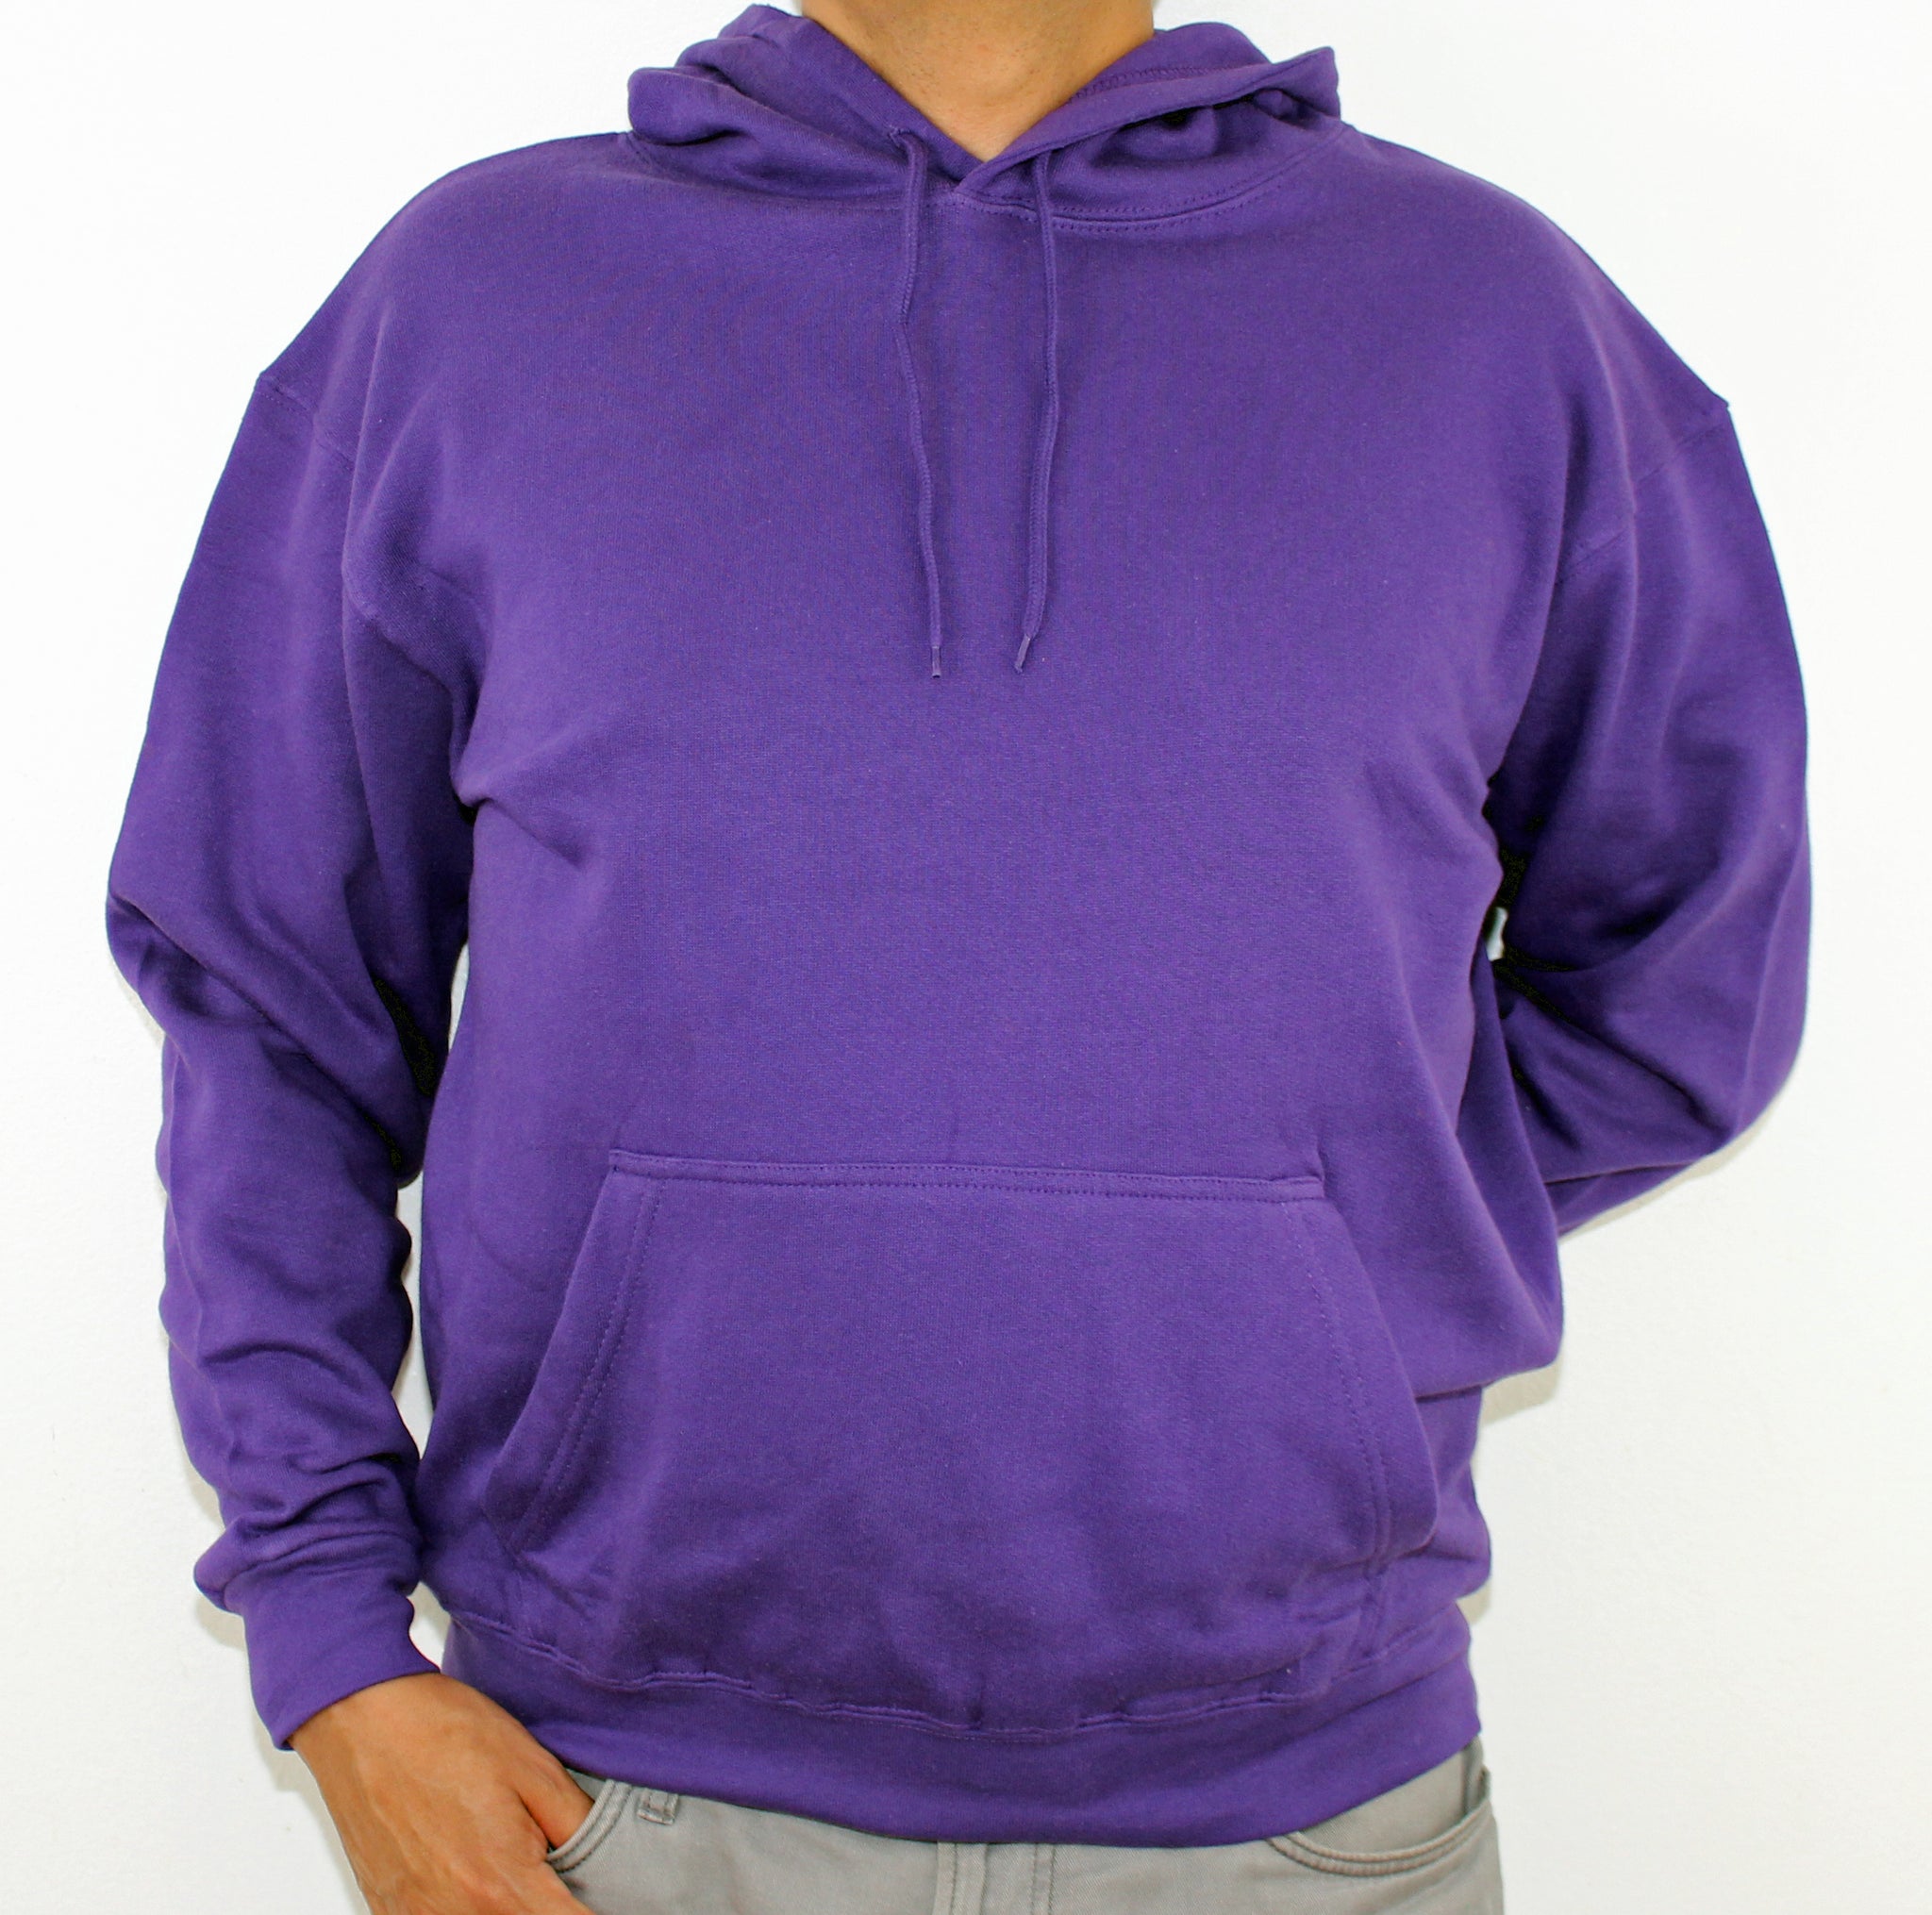 Purple Hoodies & Pullovers.